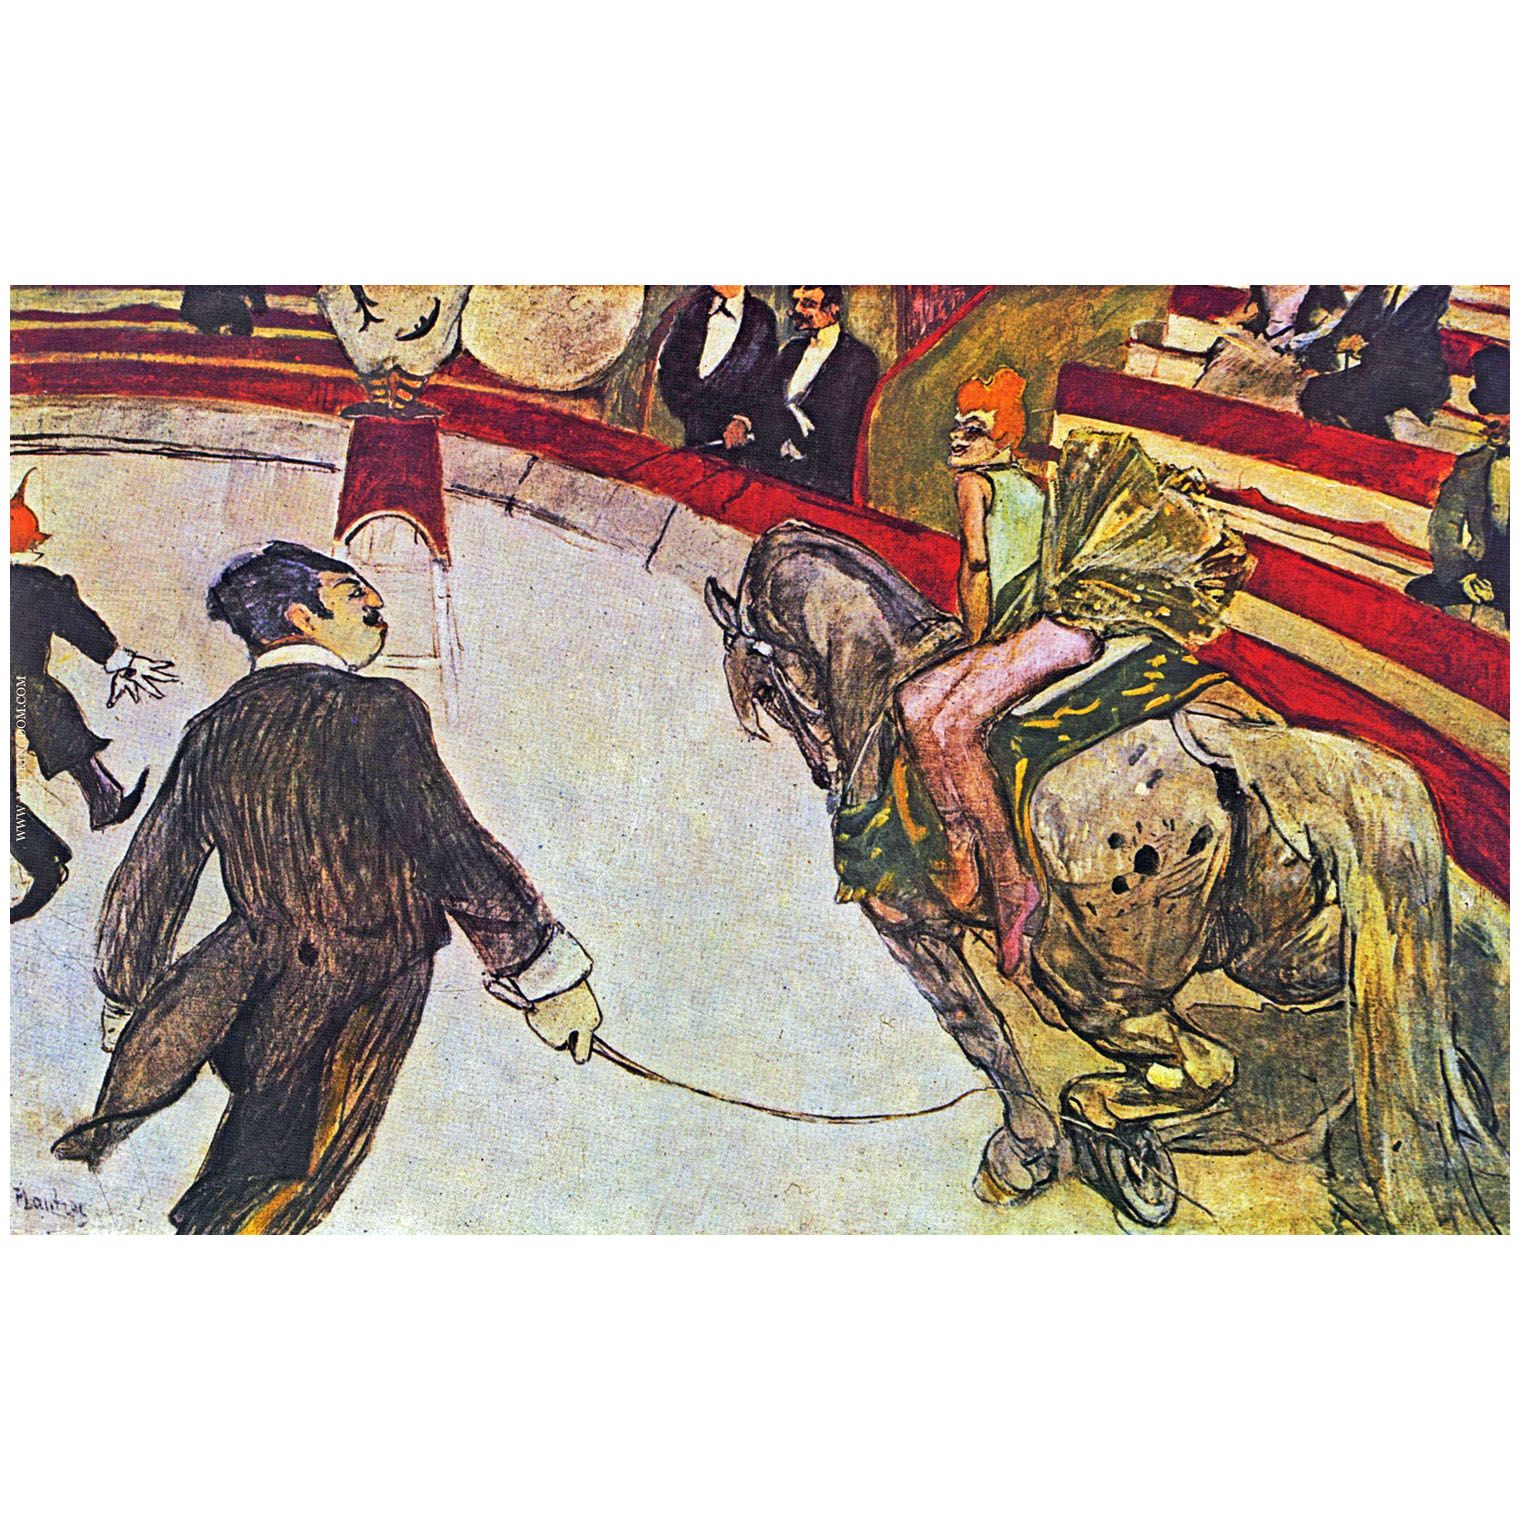 Henri de Toulouse-Lautrec. Equestrienne at the Cirque Fernando. 1888. Art Institute Chicago